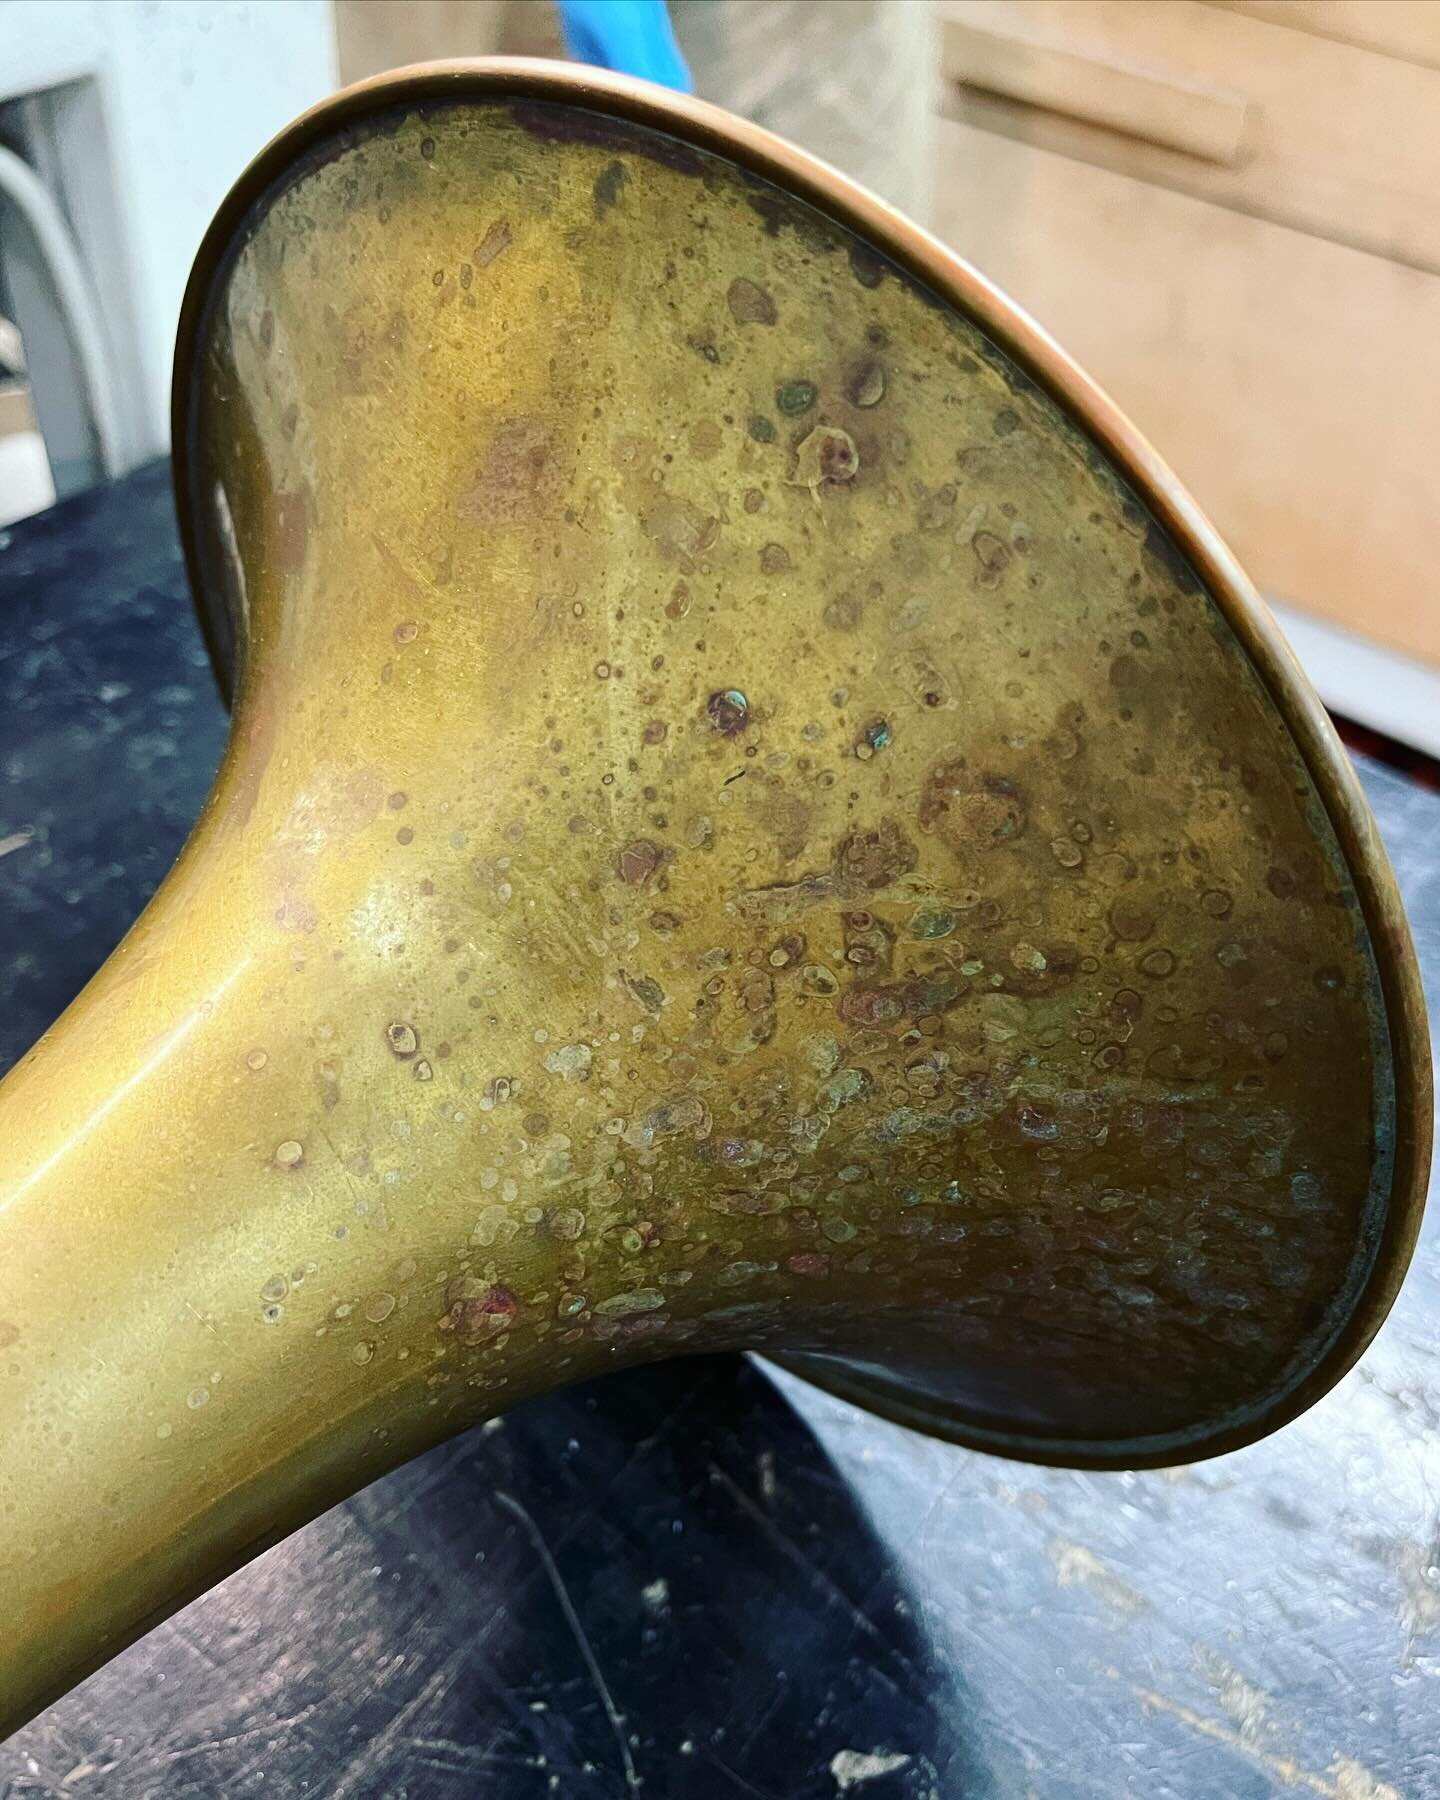 Keep it clean! Here&rsquo;s a nice refresher for this Bach trombone with light satin finish. 

#SweeneyBrass
#strip 
#quality
#shopcat
#custom
#patina
#trombone 
#basstrombone 
#doneright 
#modification
#rebuild
#custom
#refurbish
#flugabone
#tuba
#t